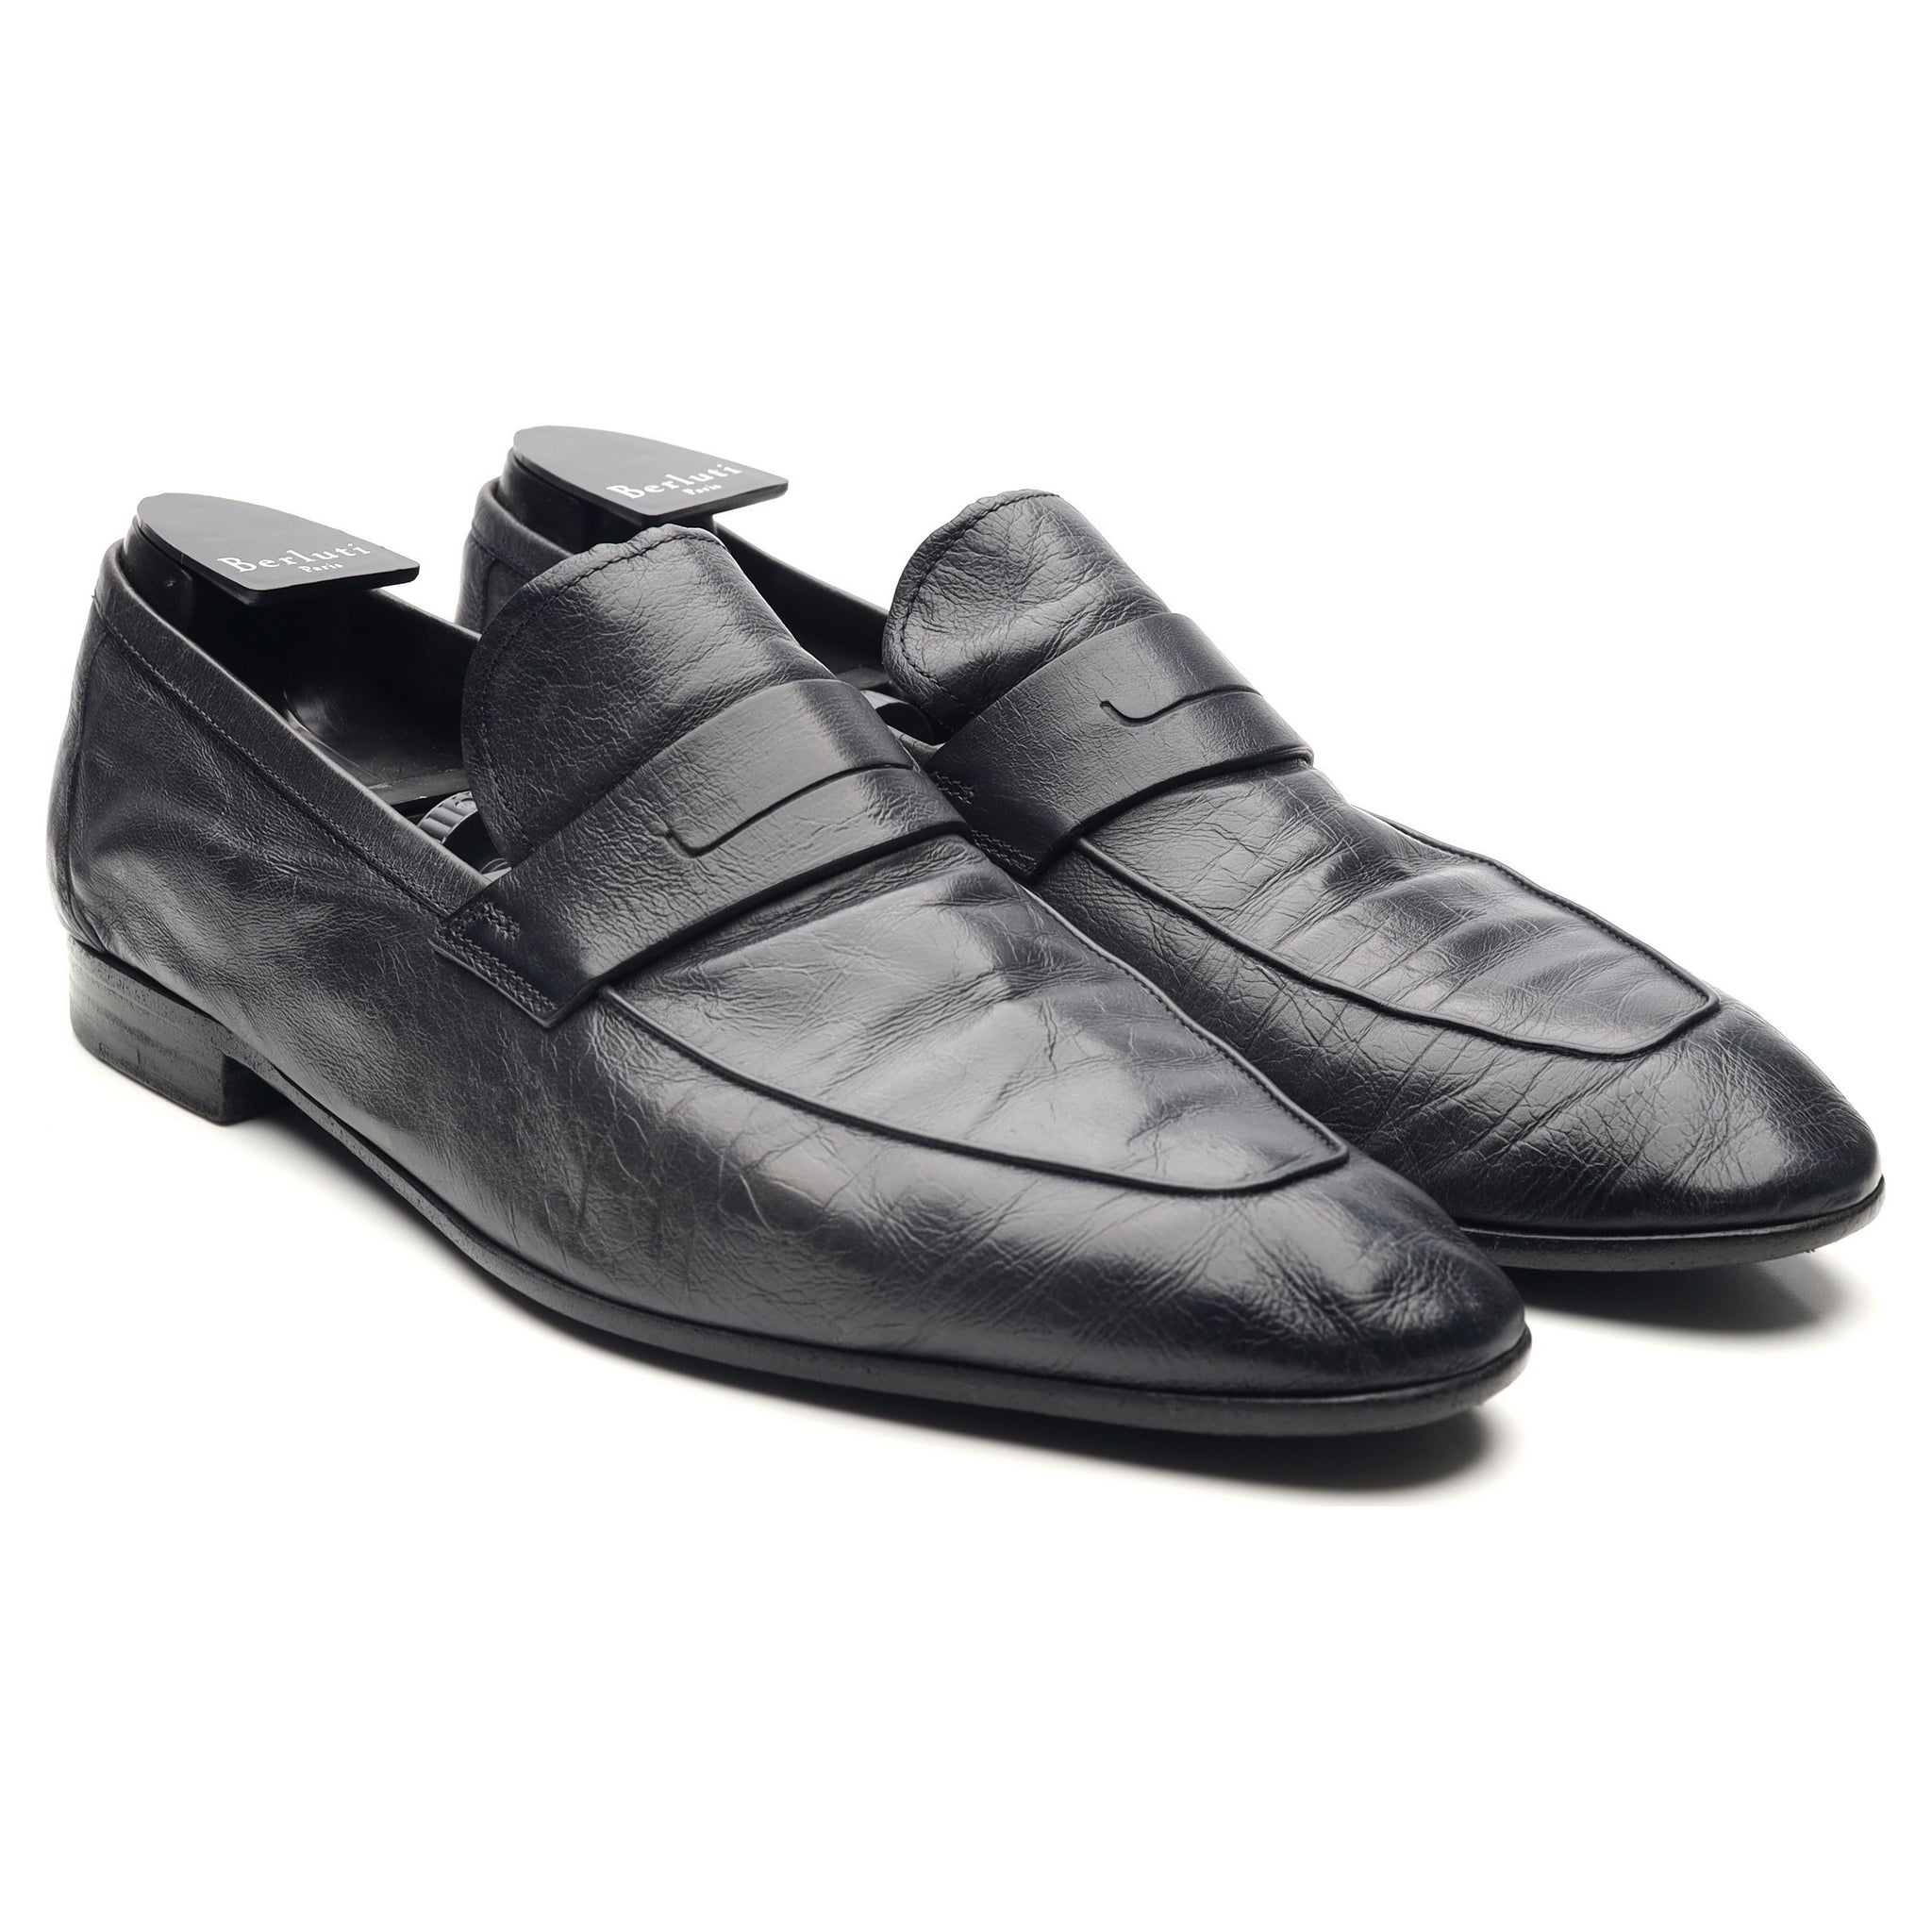 BERLUTI Lorenzo Leather Loafers for Men